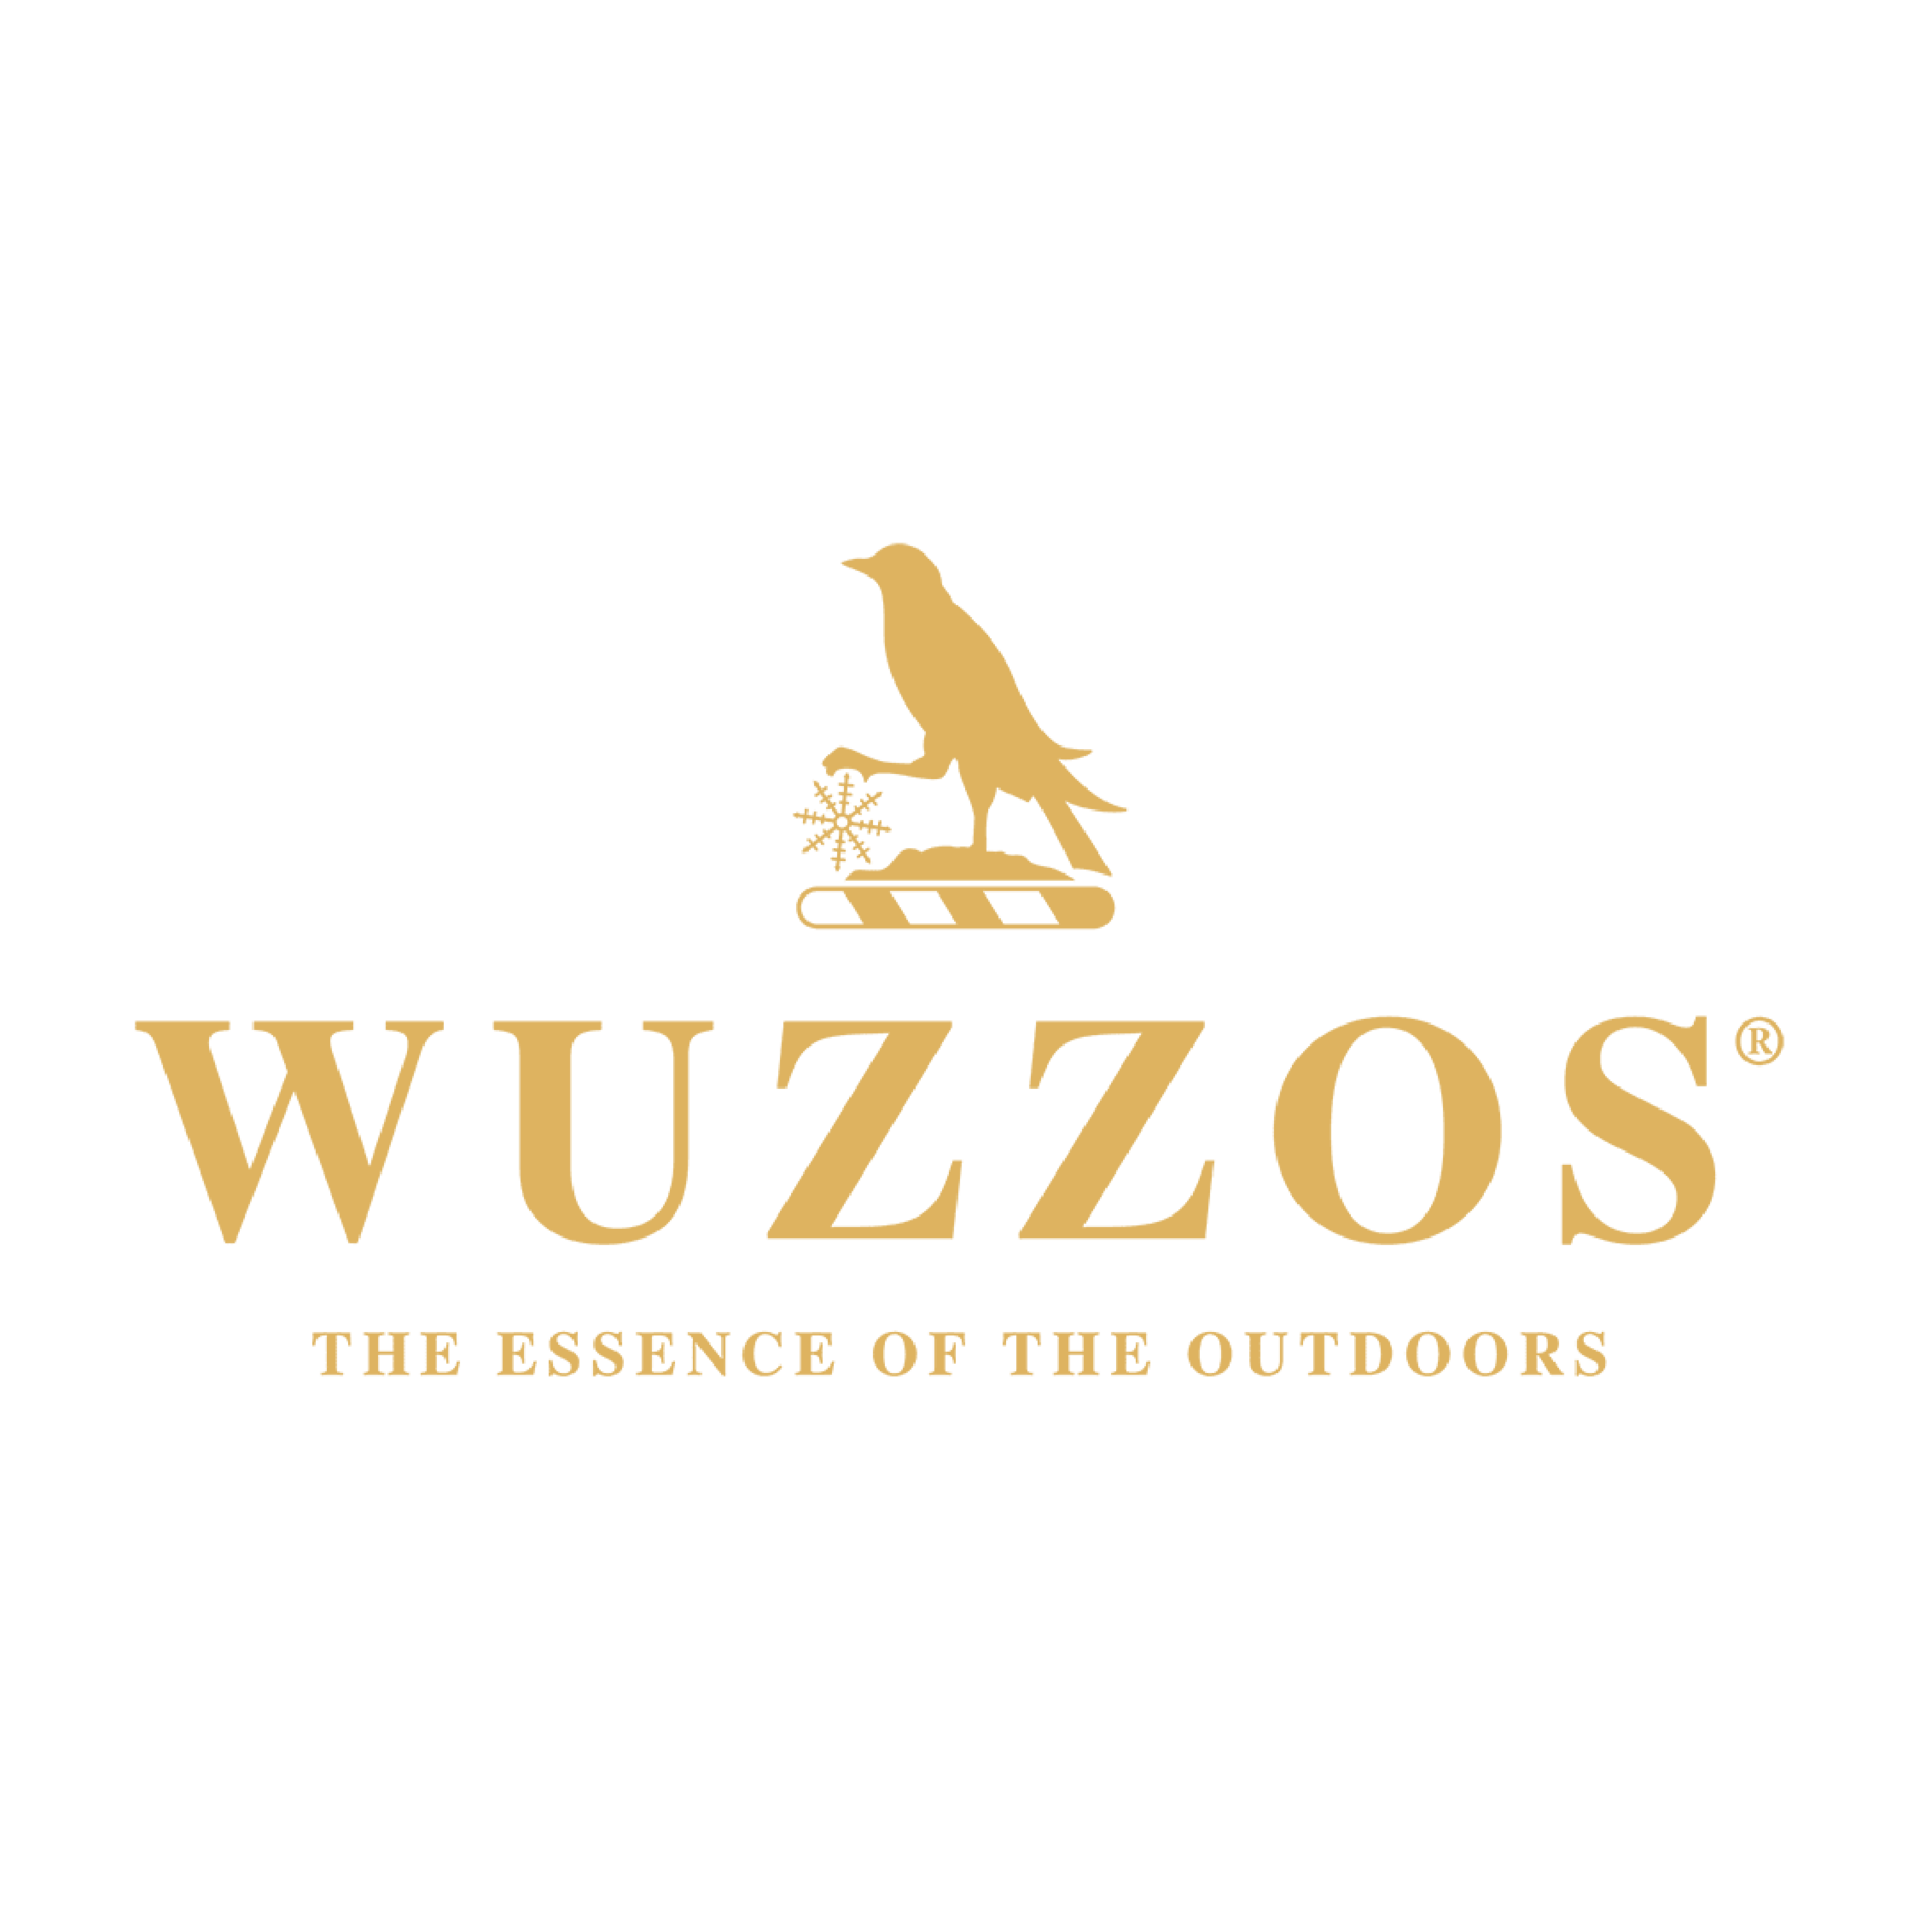 Wuzzos